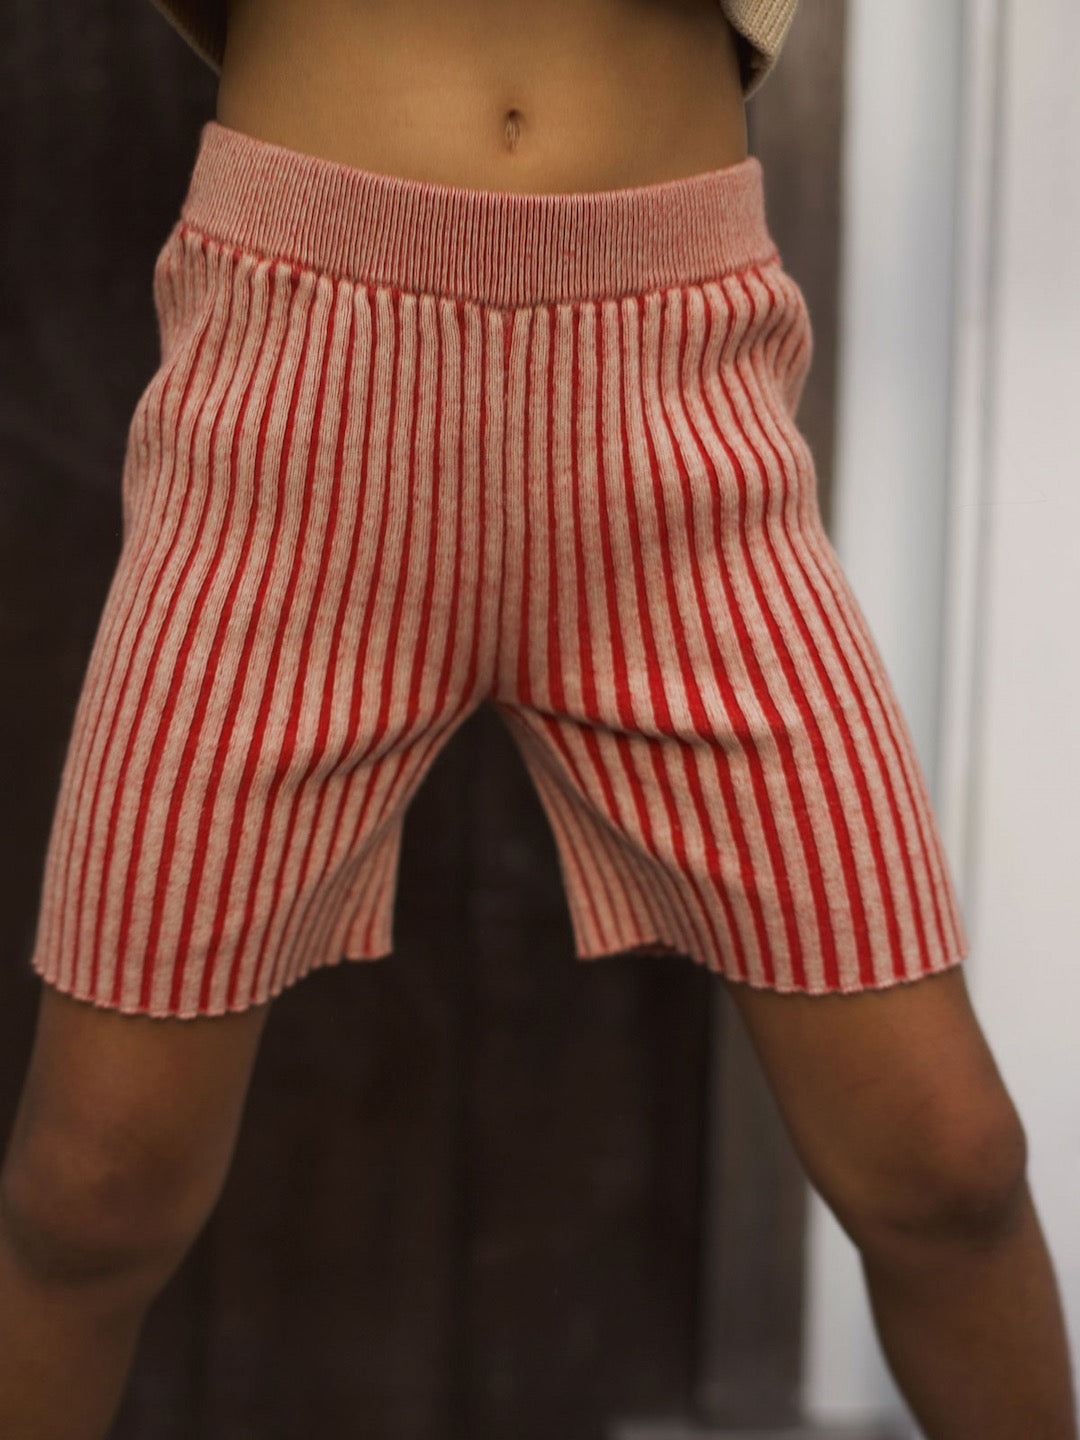 A girl wearing SUNNA STUDIOS Rue Short - Red Multi striped shorts.